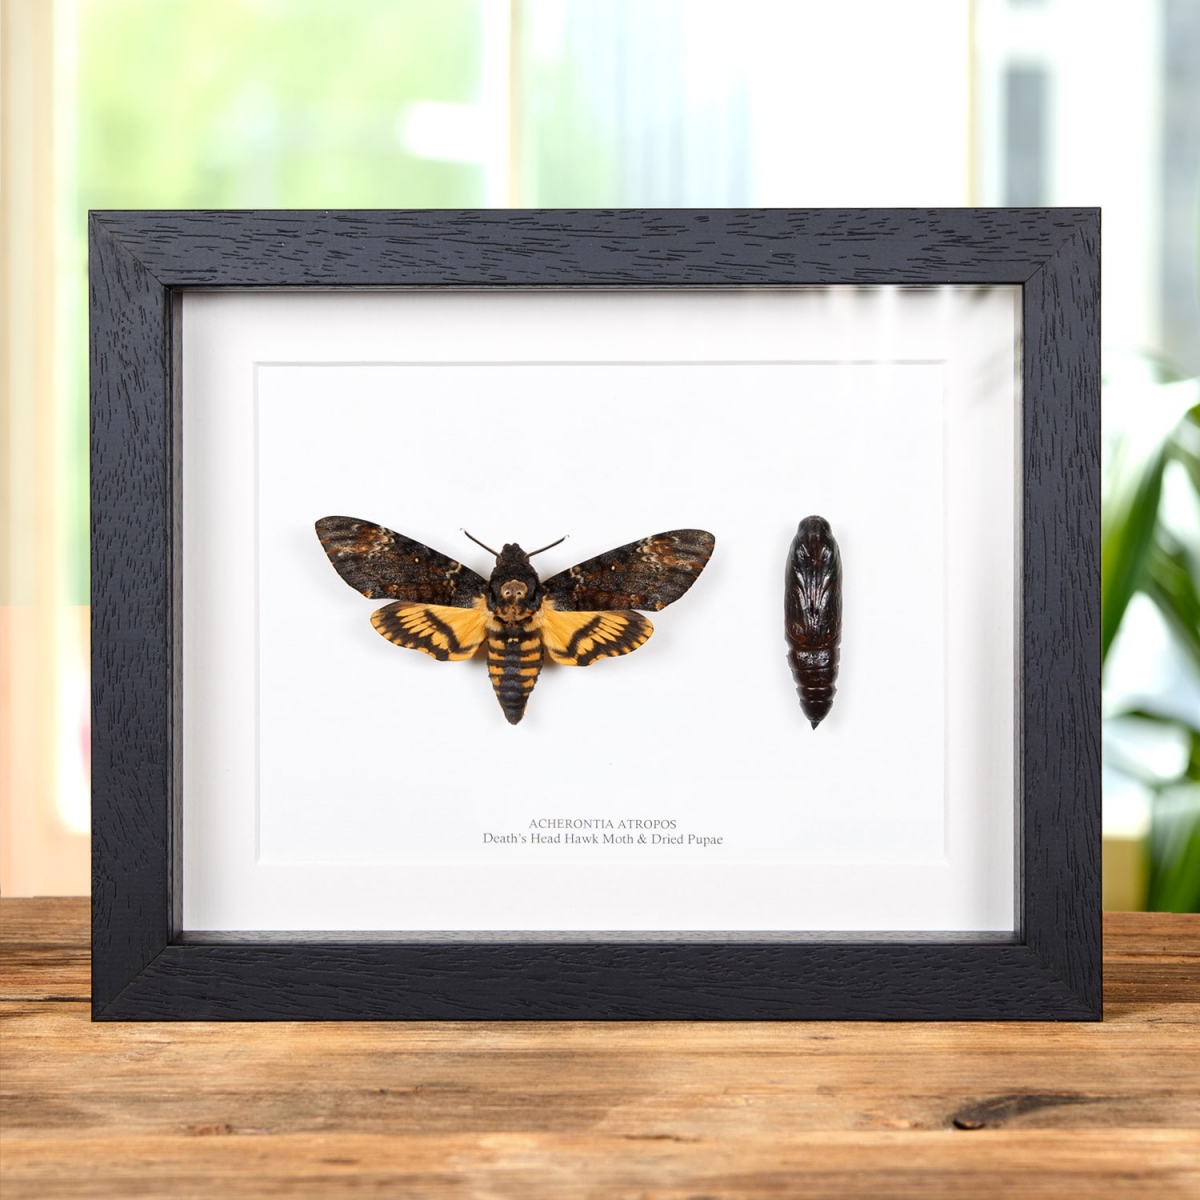 Minibeast Pupae and Death's Head Hawk Moth in Box Frame (Acherontia atropos)